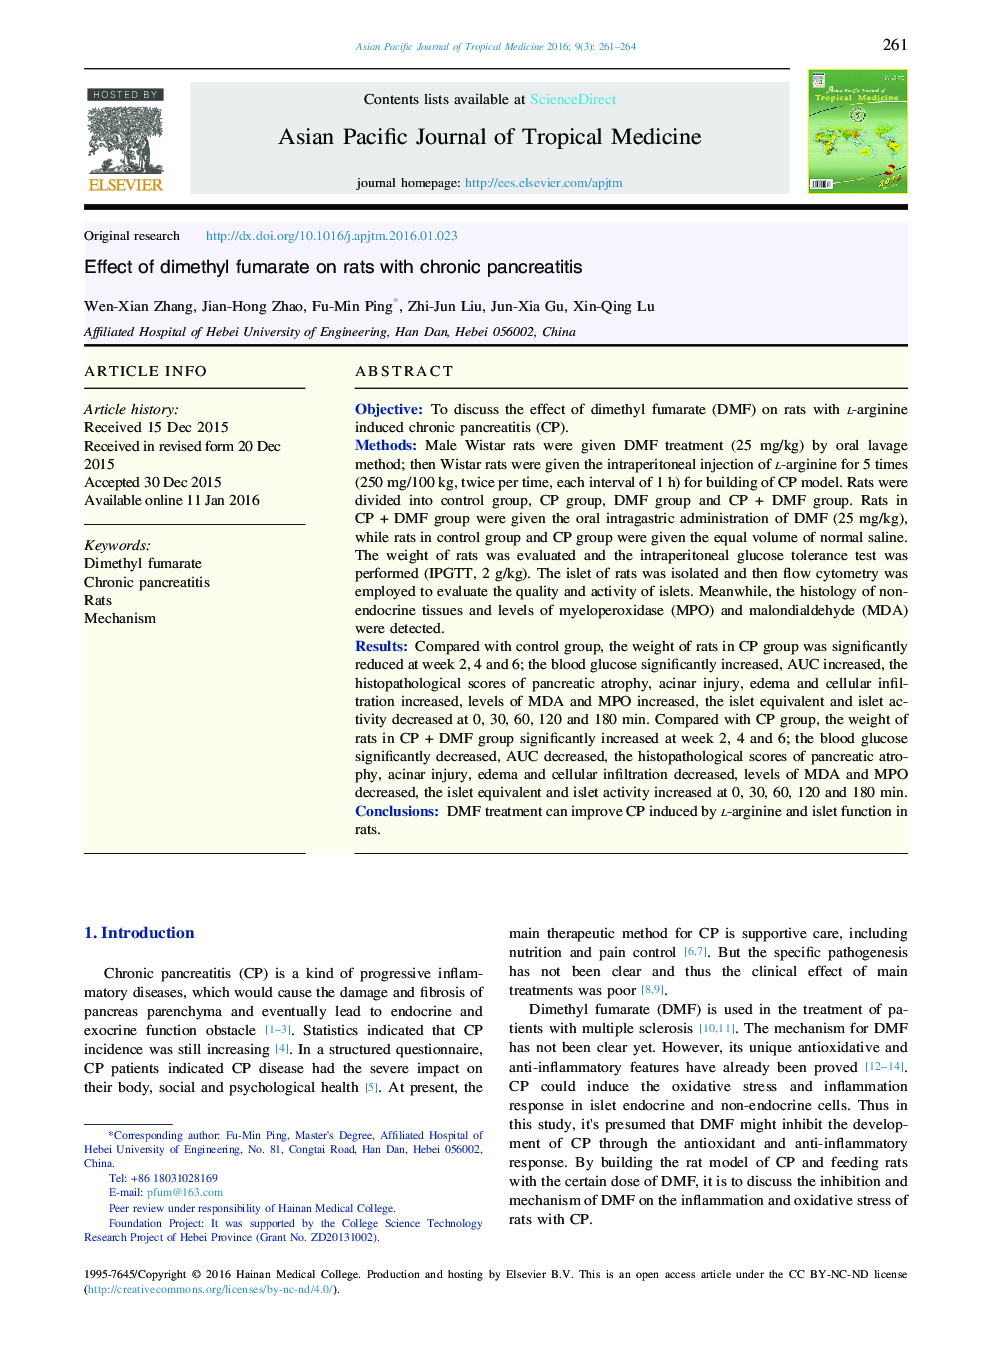 Effect of dimethyl fumarate on rats with chronic pancreatitis 